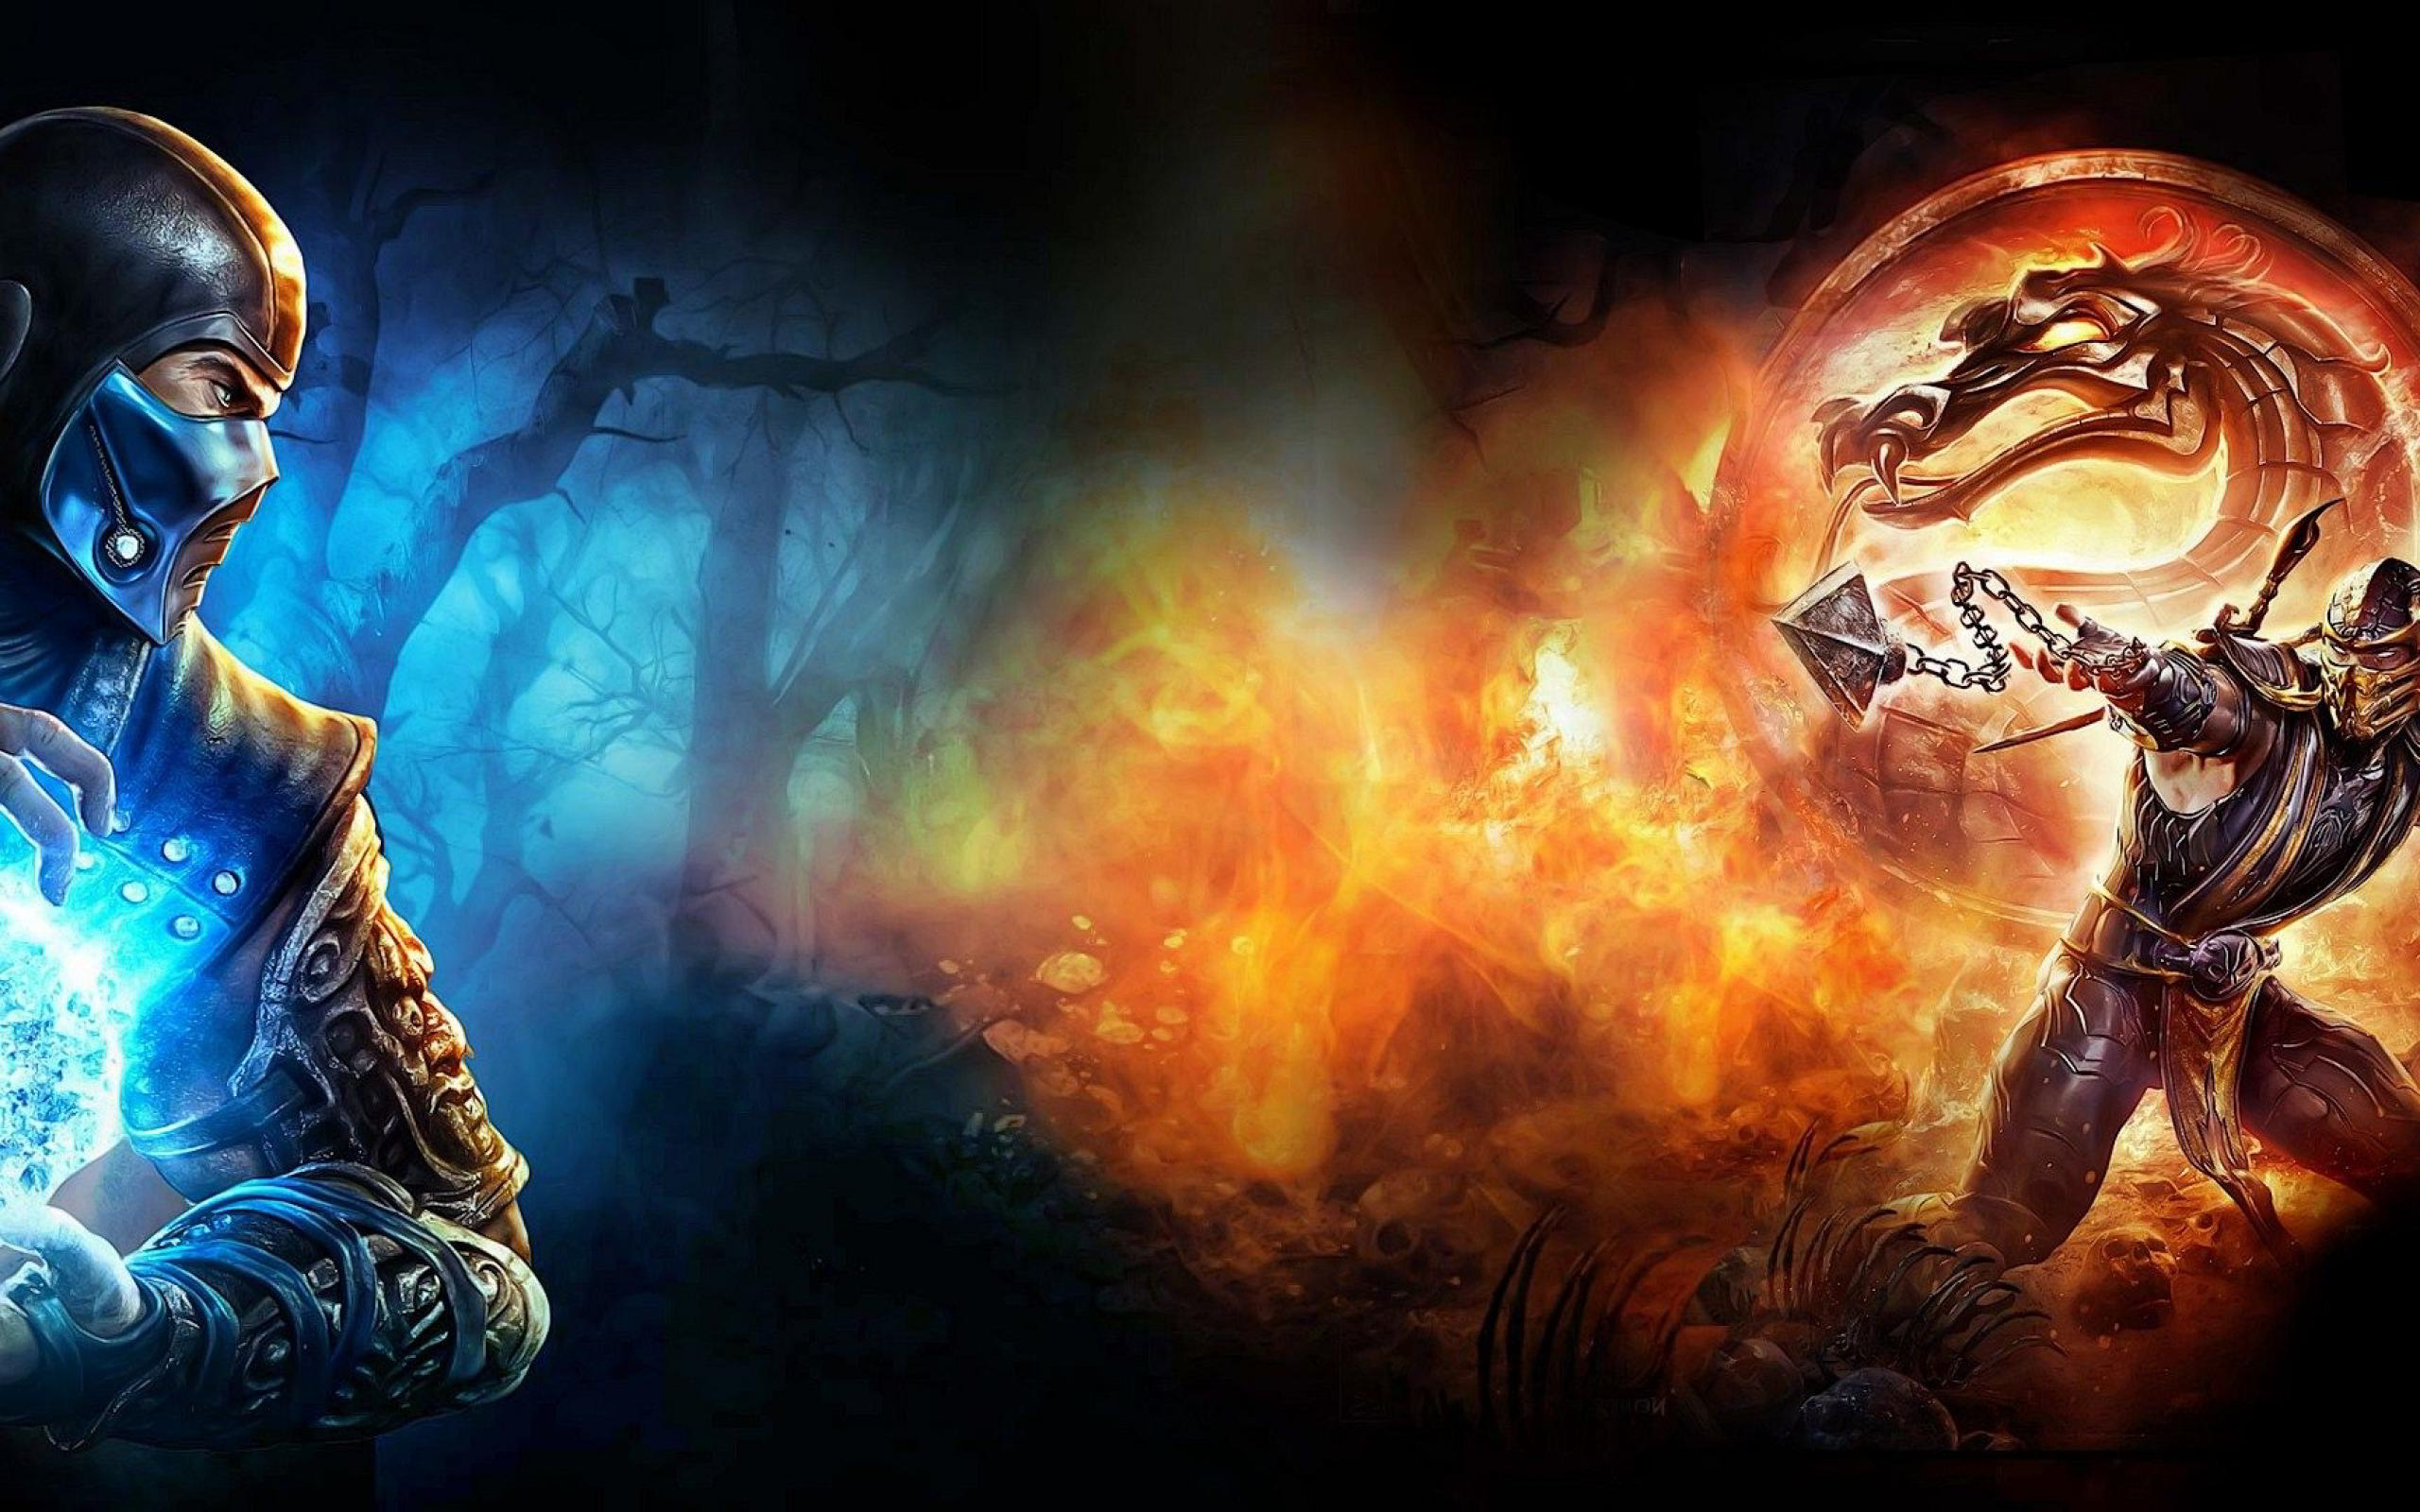 Mortal Kombat 11 Poster 2020 4K Ultra HD Mobile Wallpaper